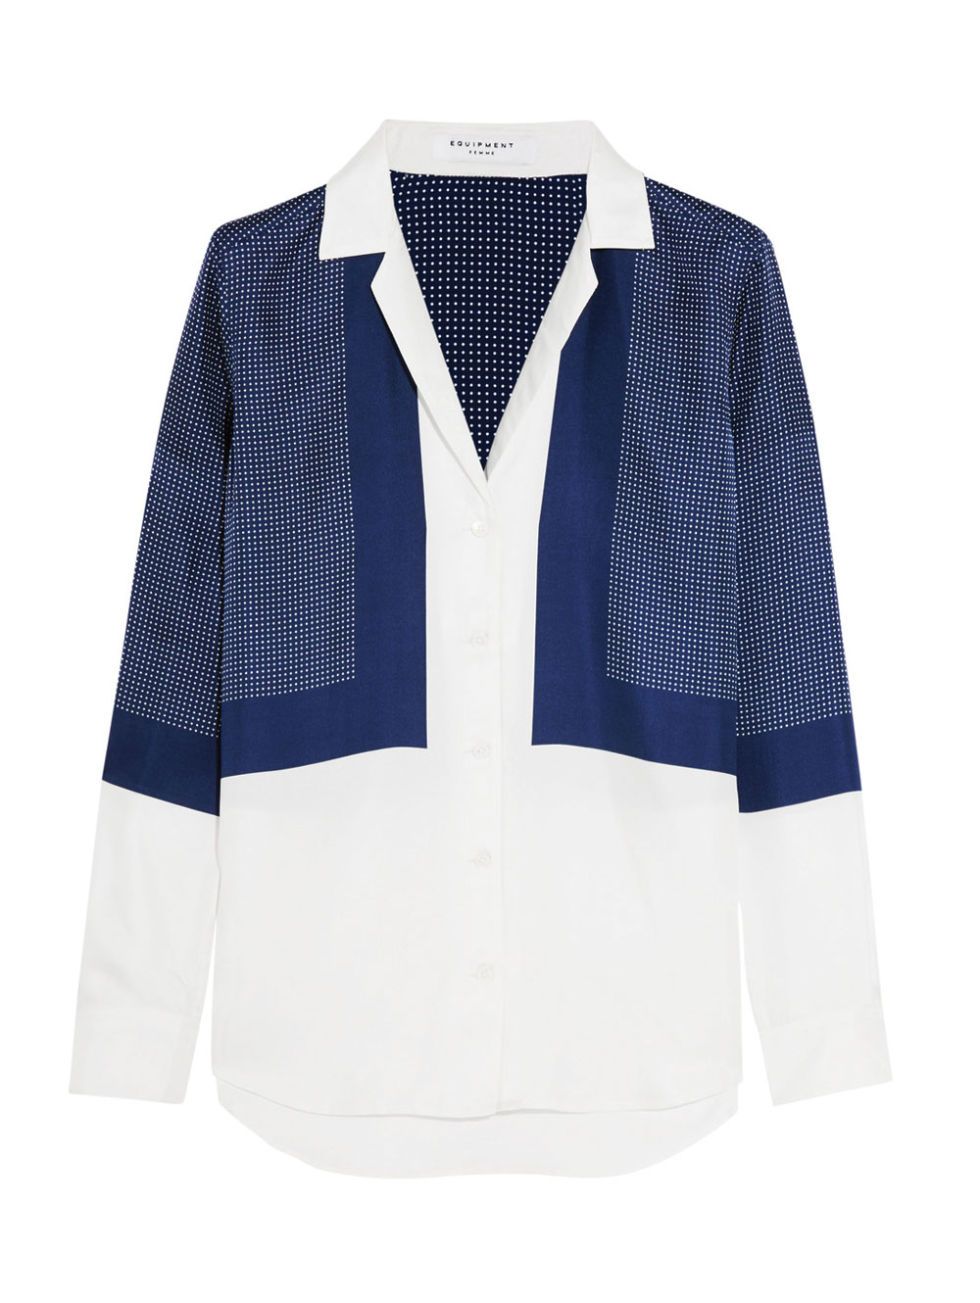 Blue, Product, Dress shirt, Collar, Sleeve, Coat, Shirt, Textile, Outerwear, White, 